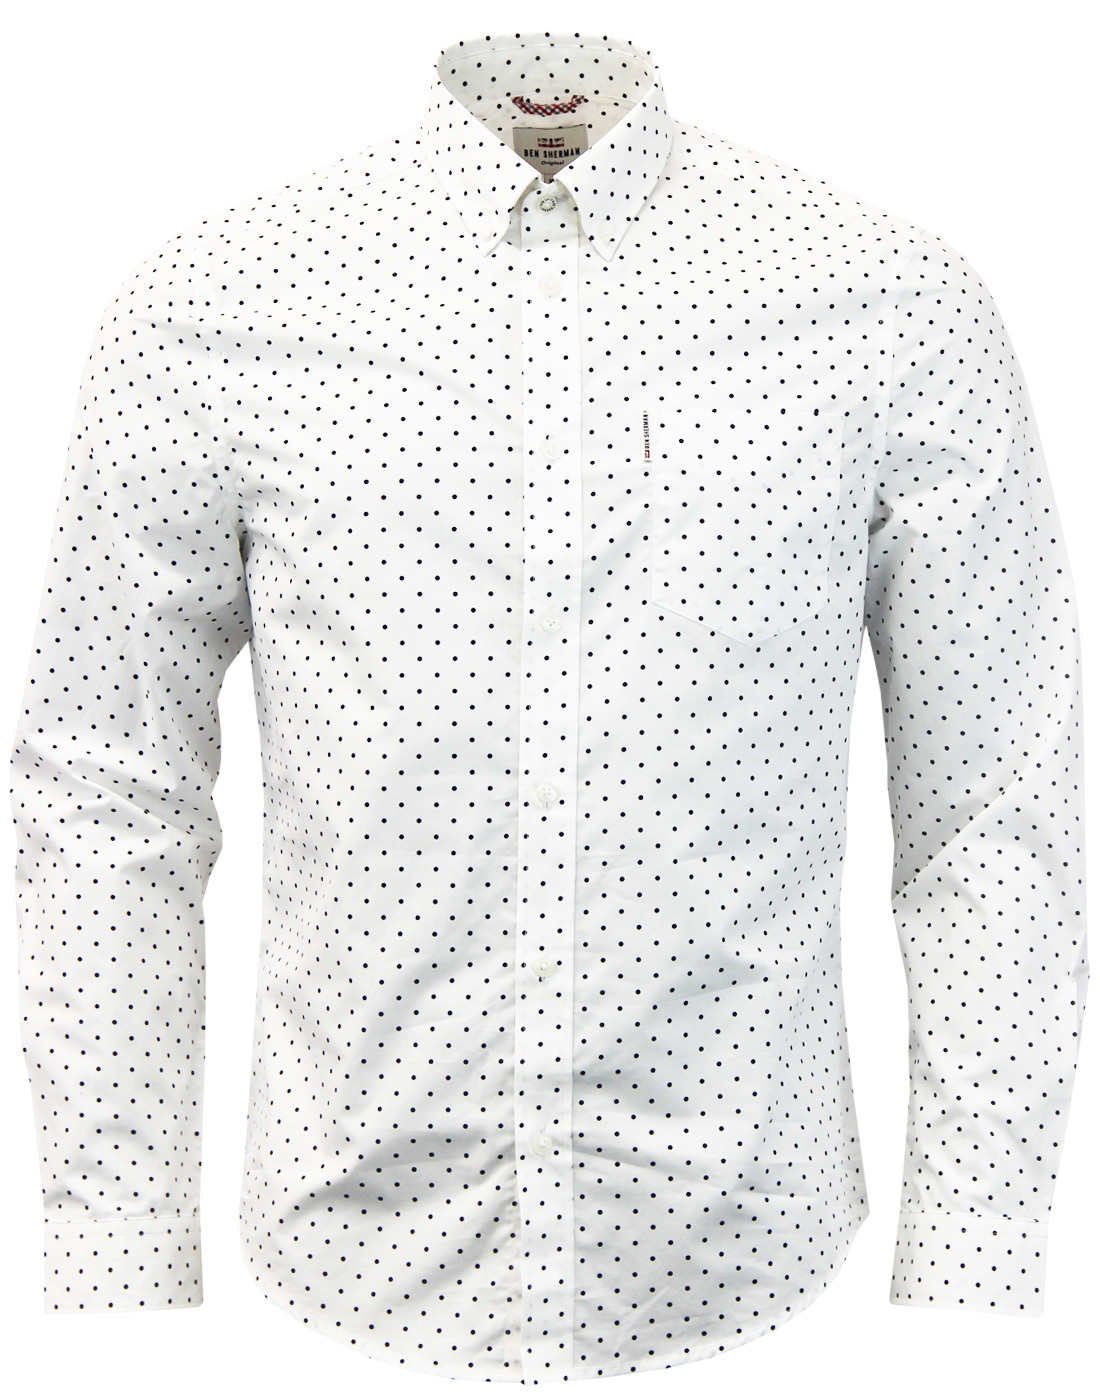 BEN SHERMAN Retro 60s Polka Dot shirt WHITE